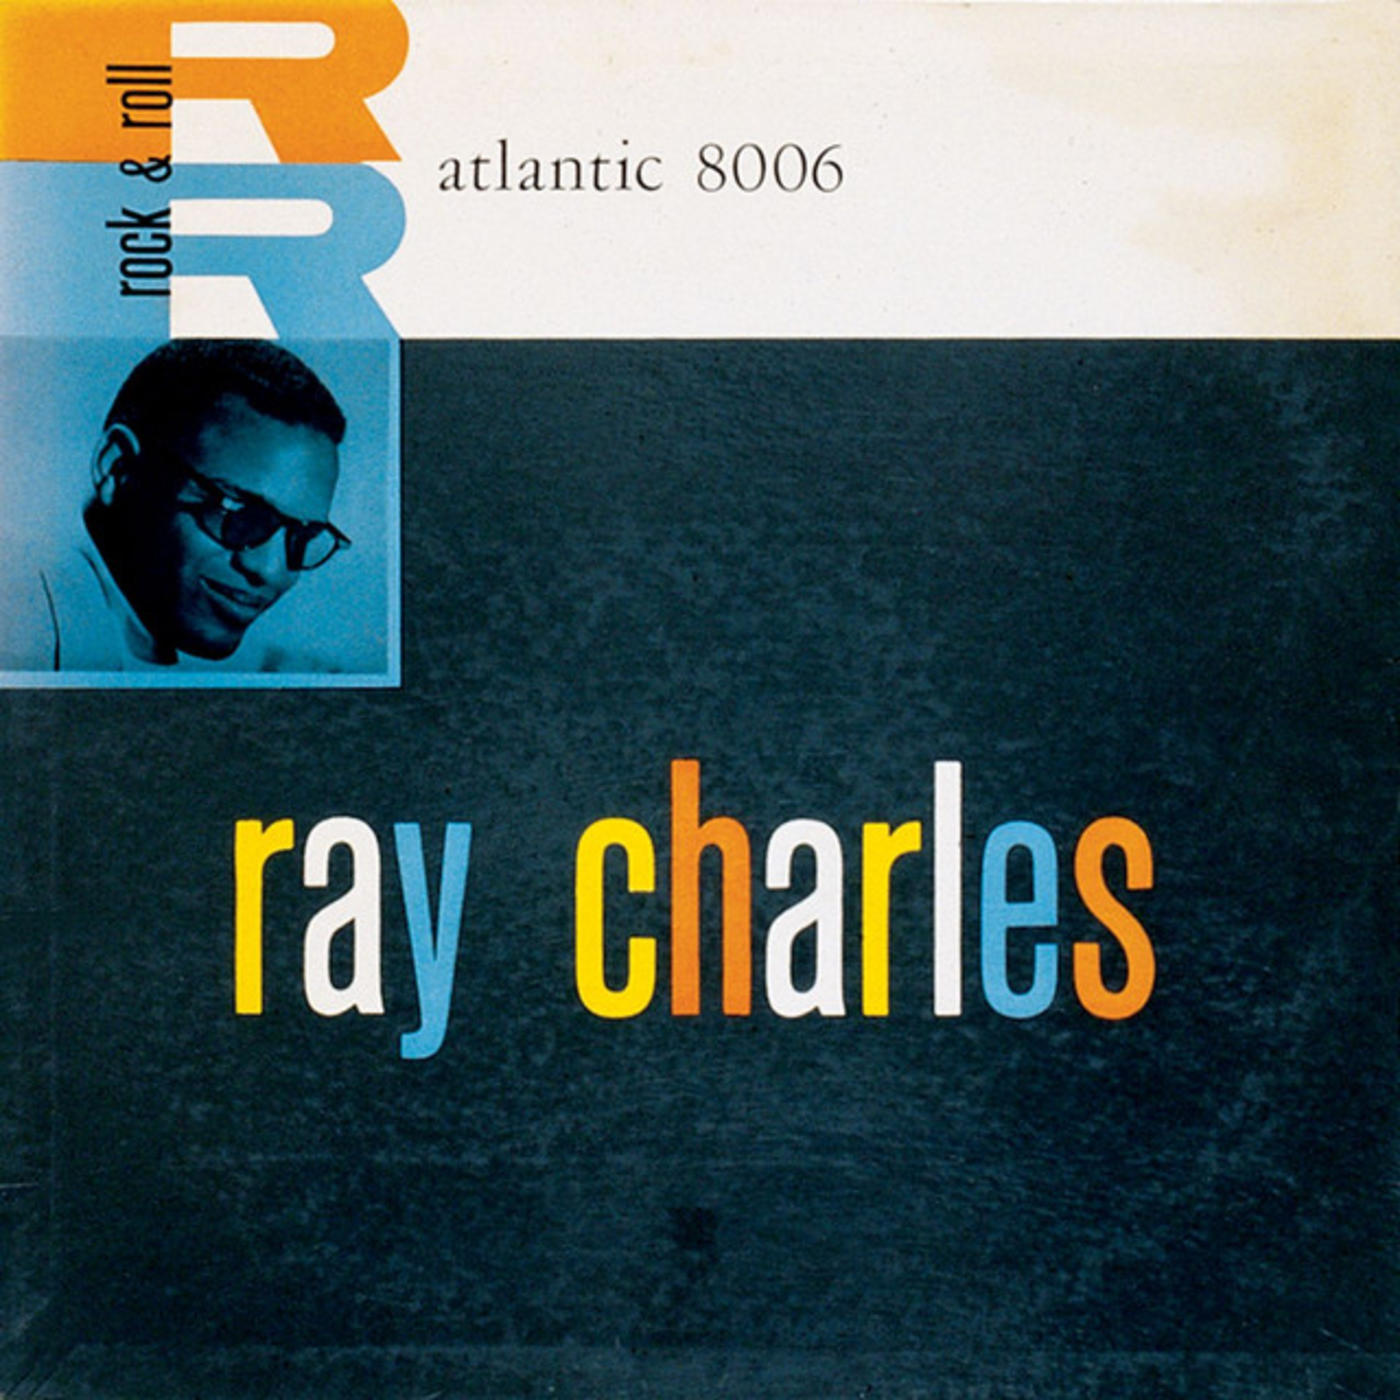 Ray Charles Top Tracks